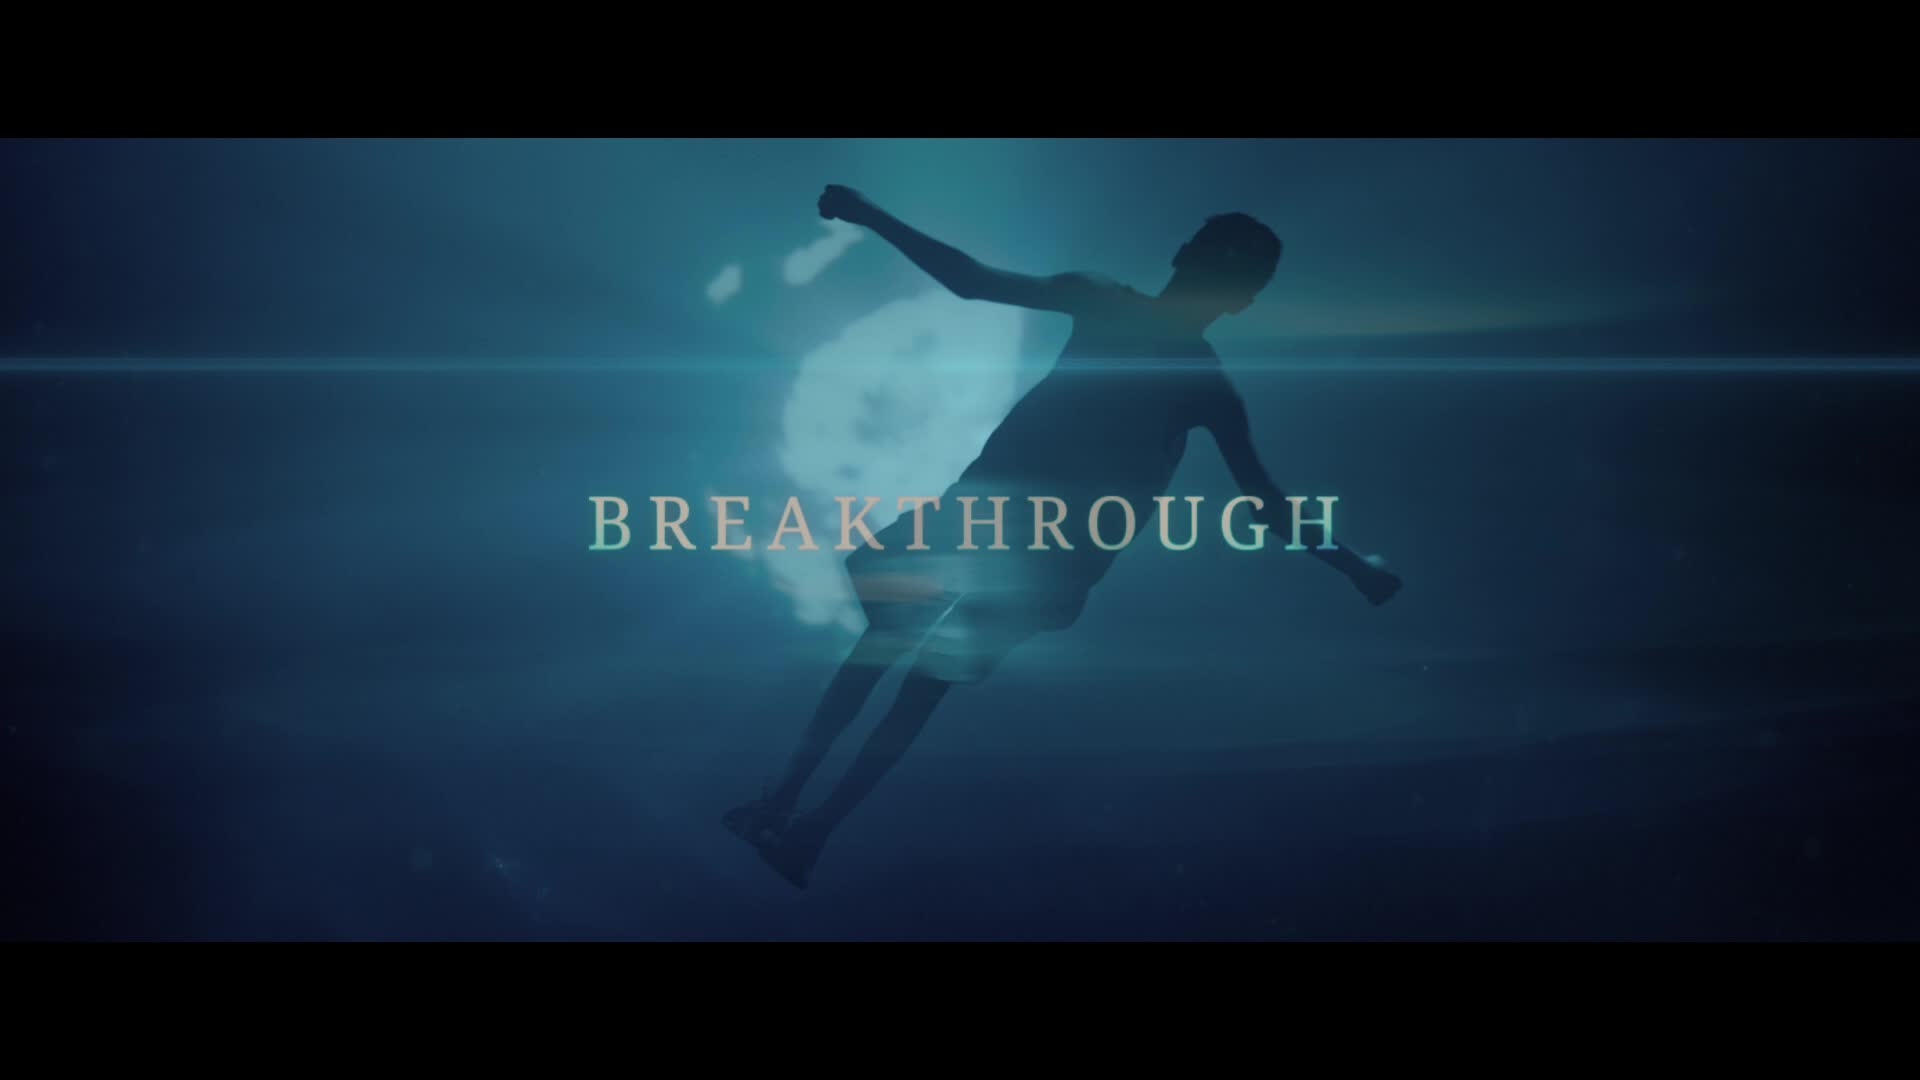 Breakthrough title